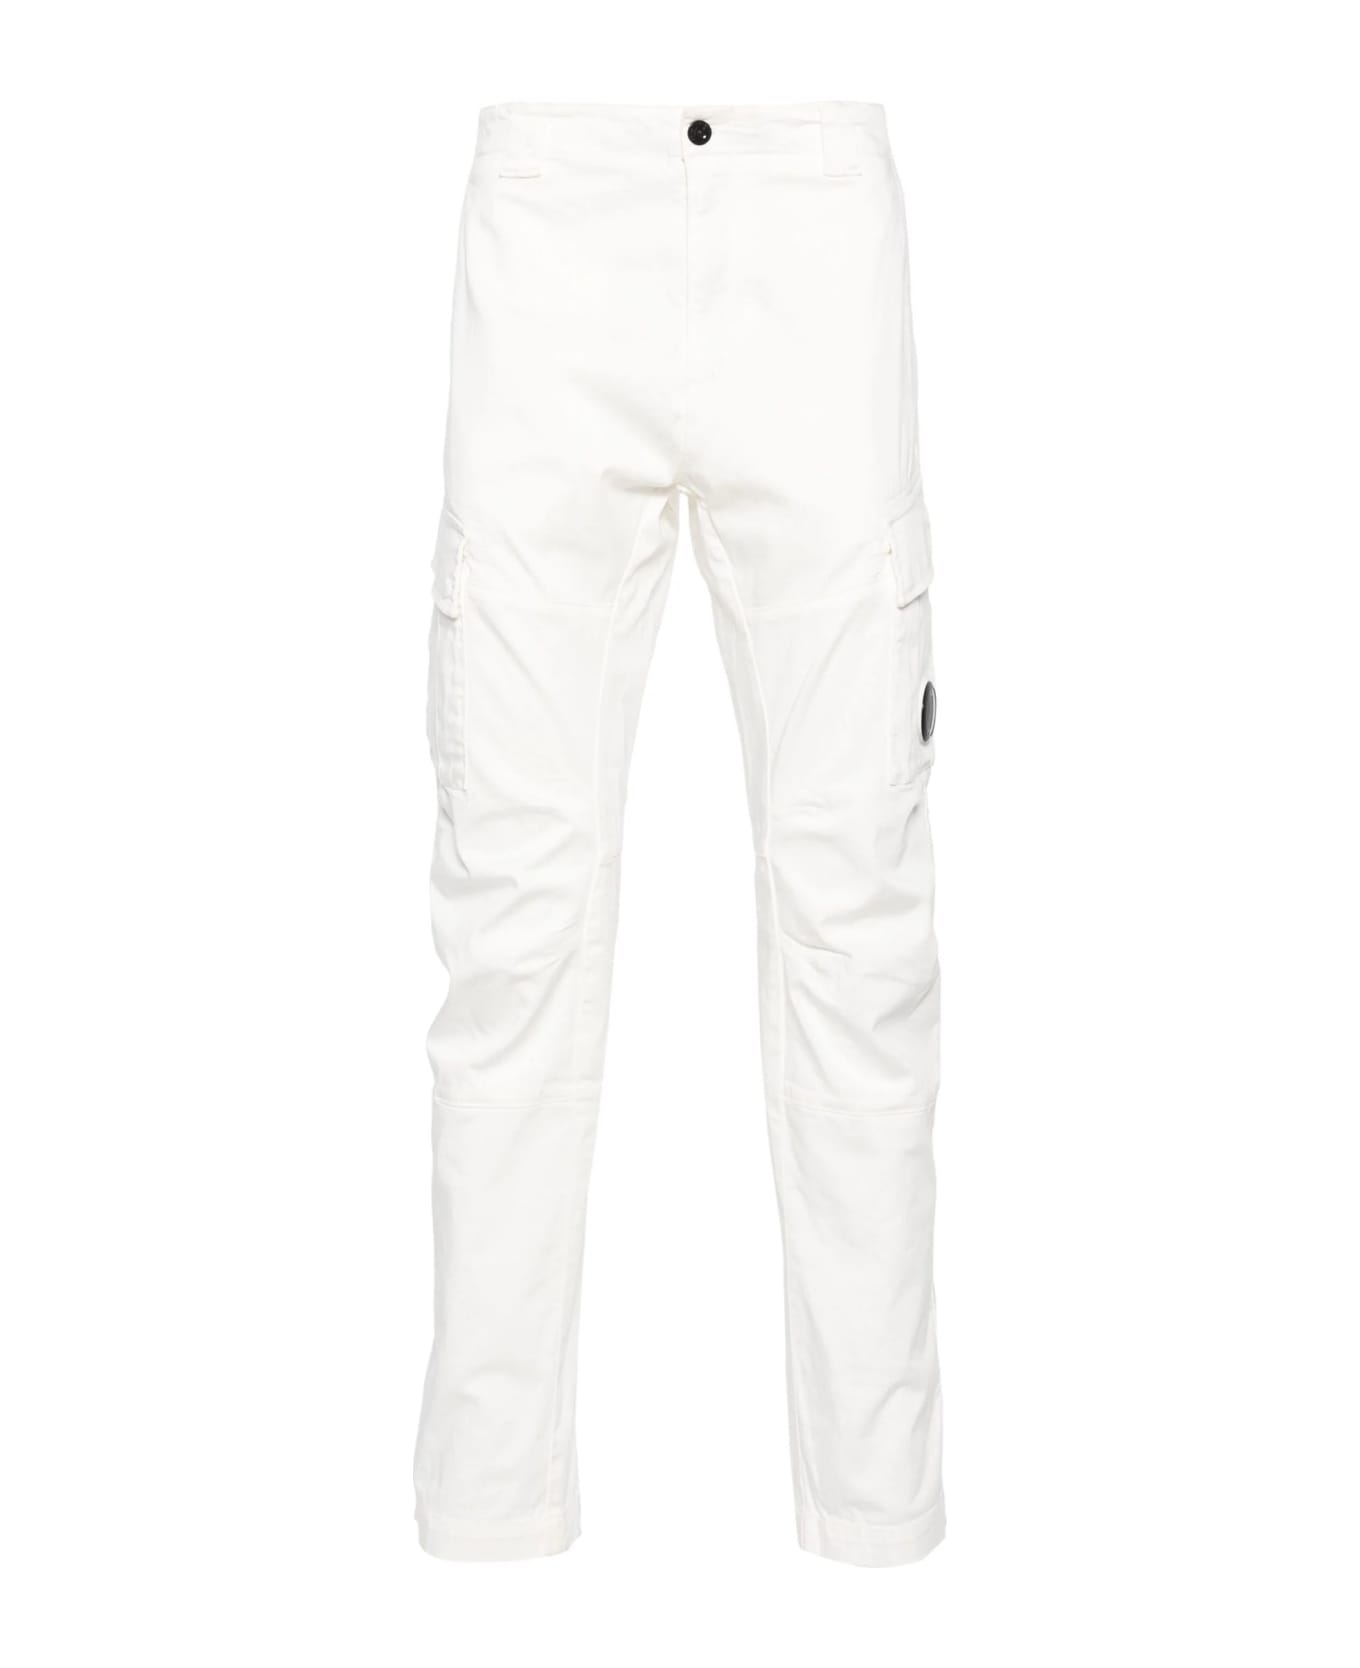 C.P. Company C.p.company Trousers White - White